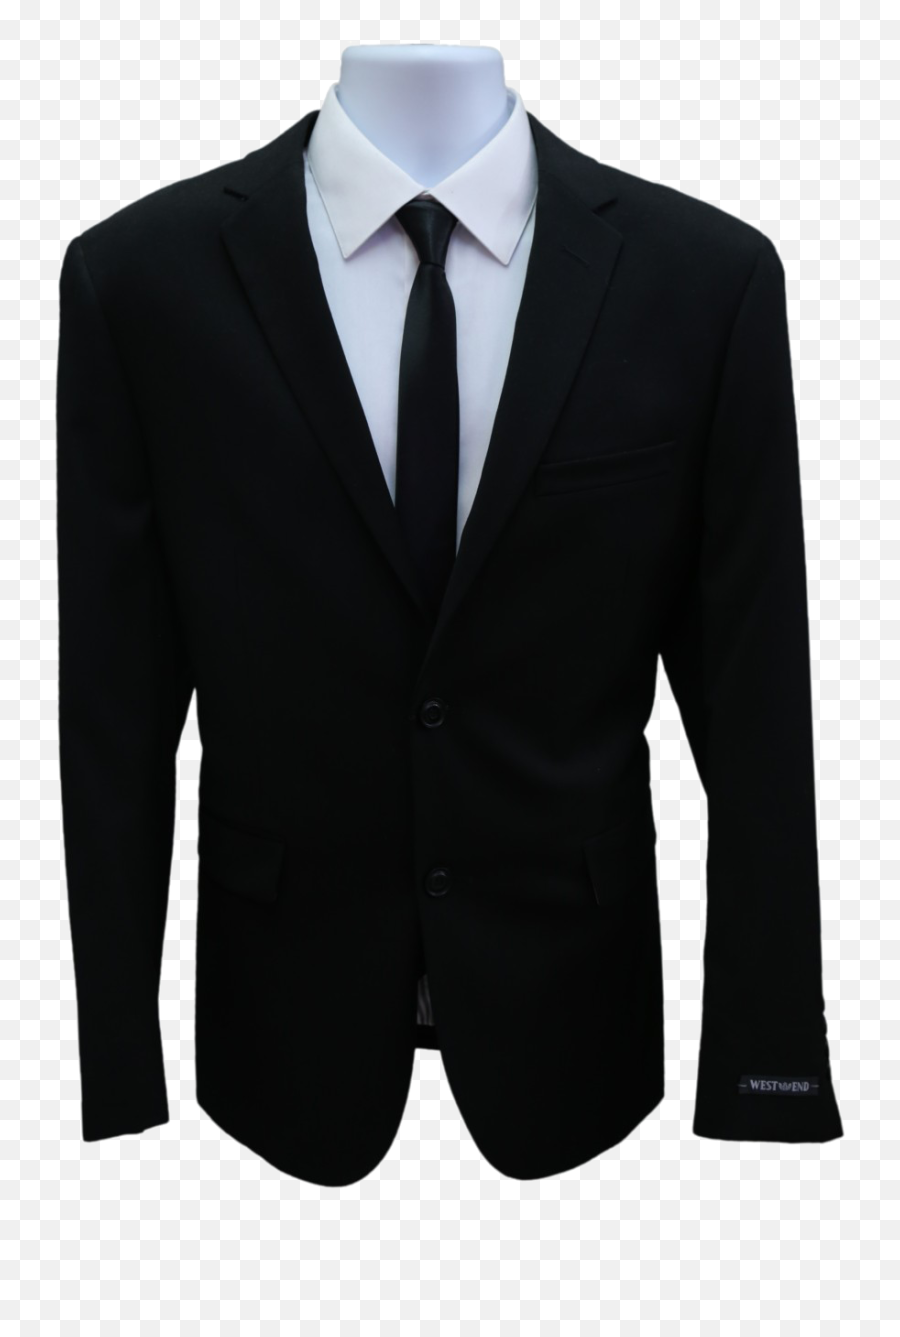 Black Suit Png Image Background - Black Suit Transparent Background Emoji,Suit Png